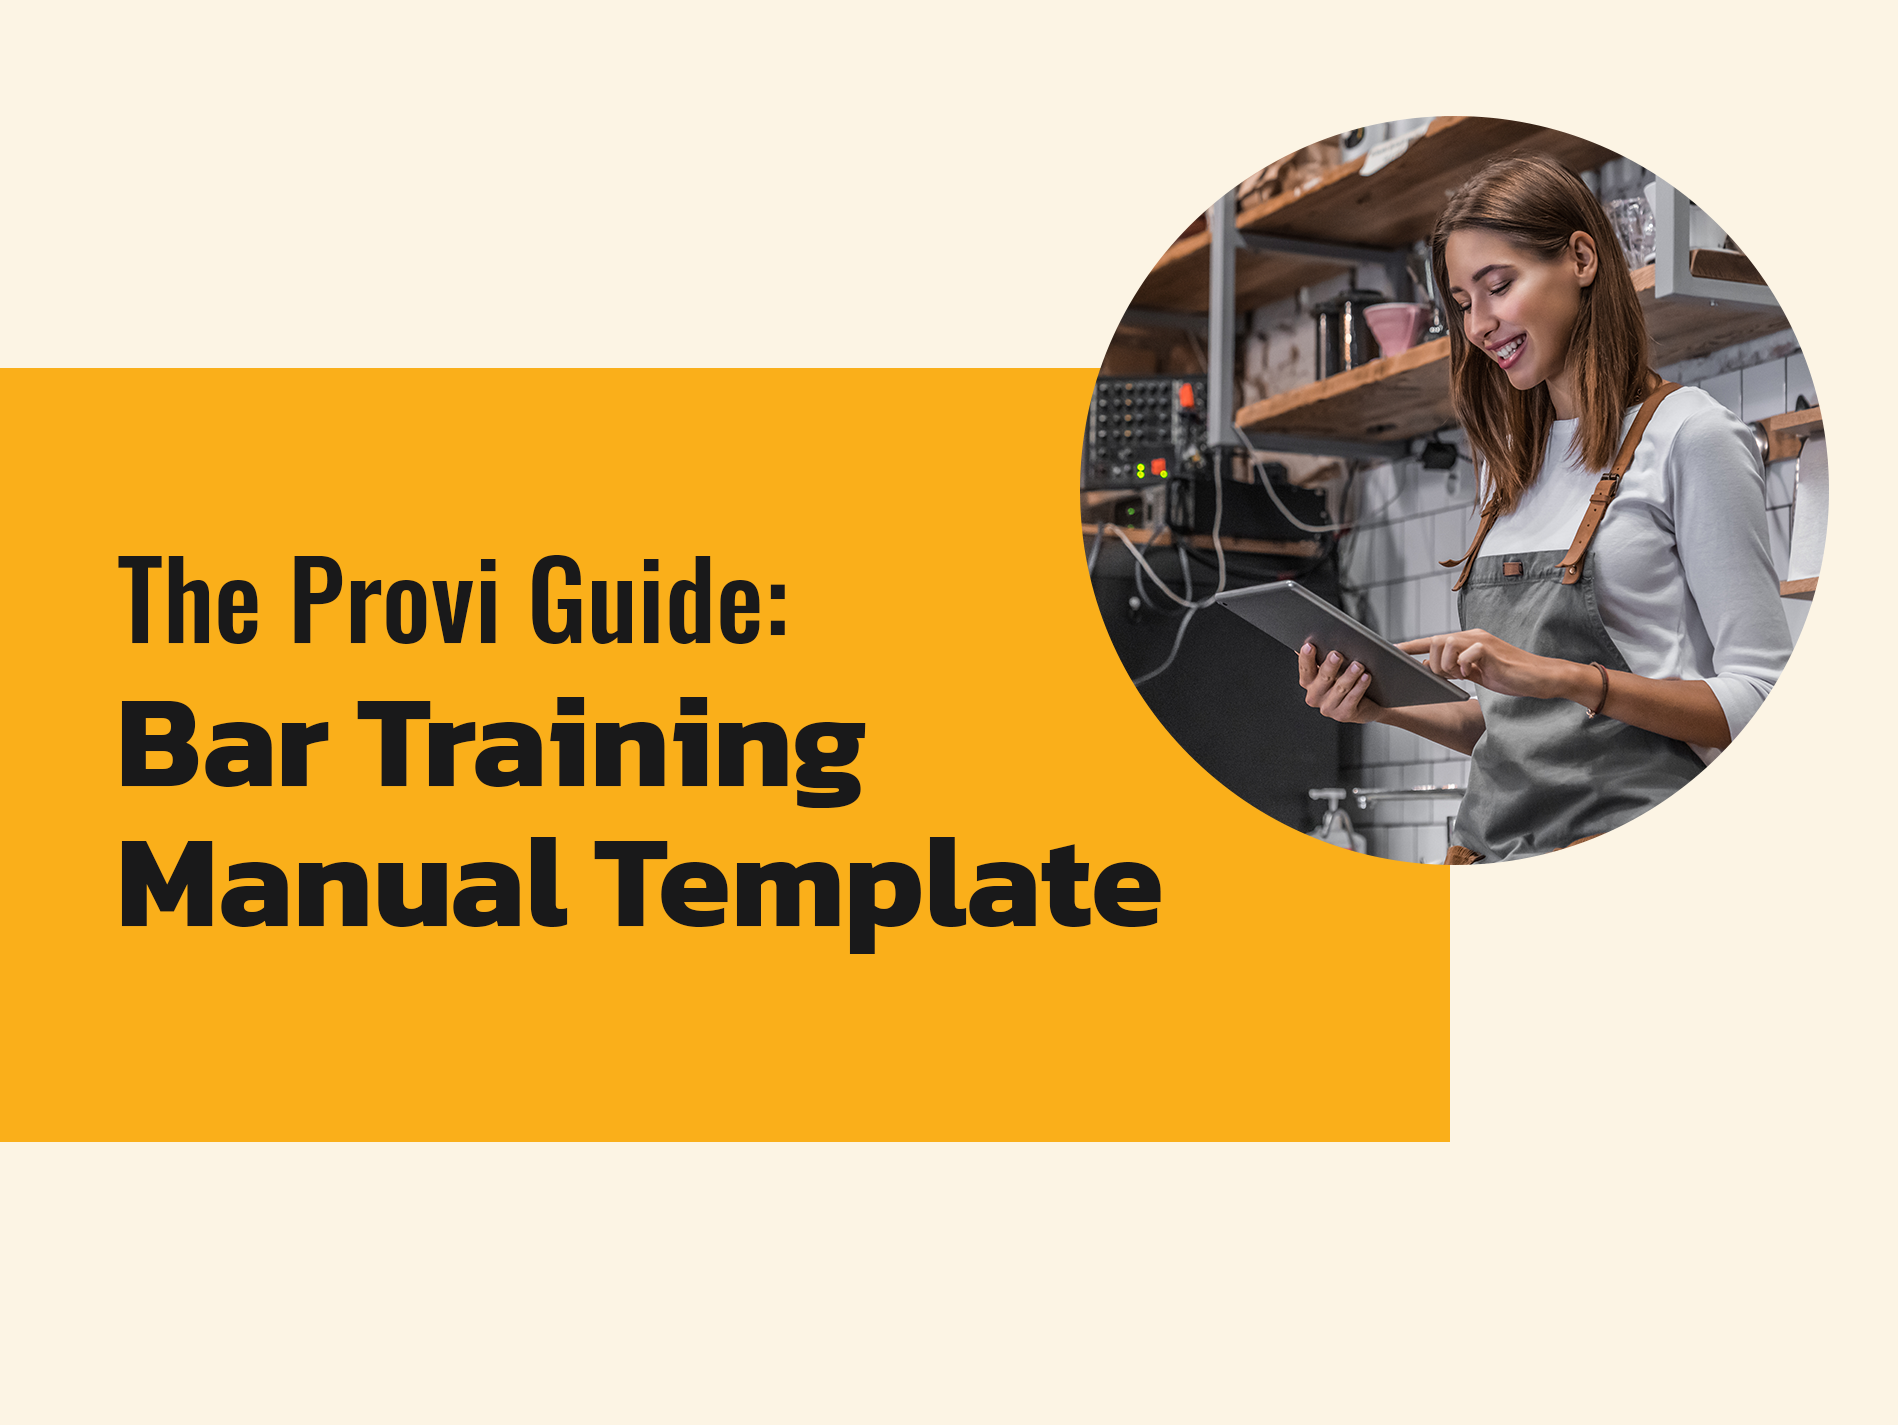 The Provi Guide: Bar Training Manual Template